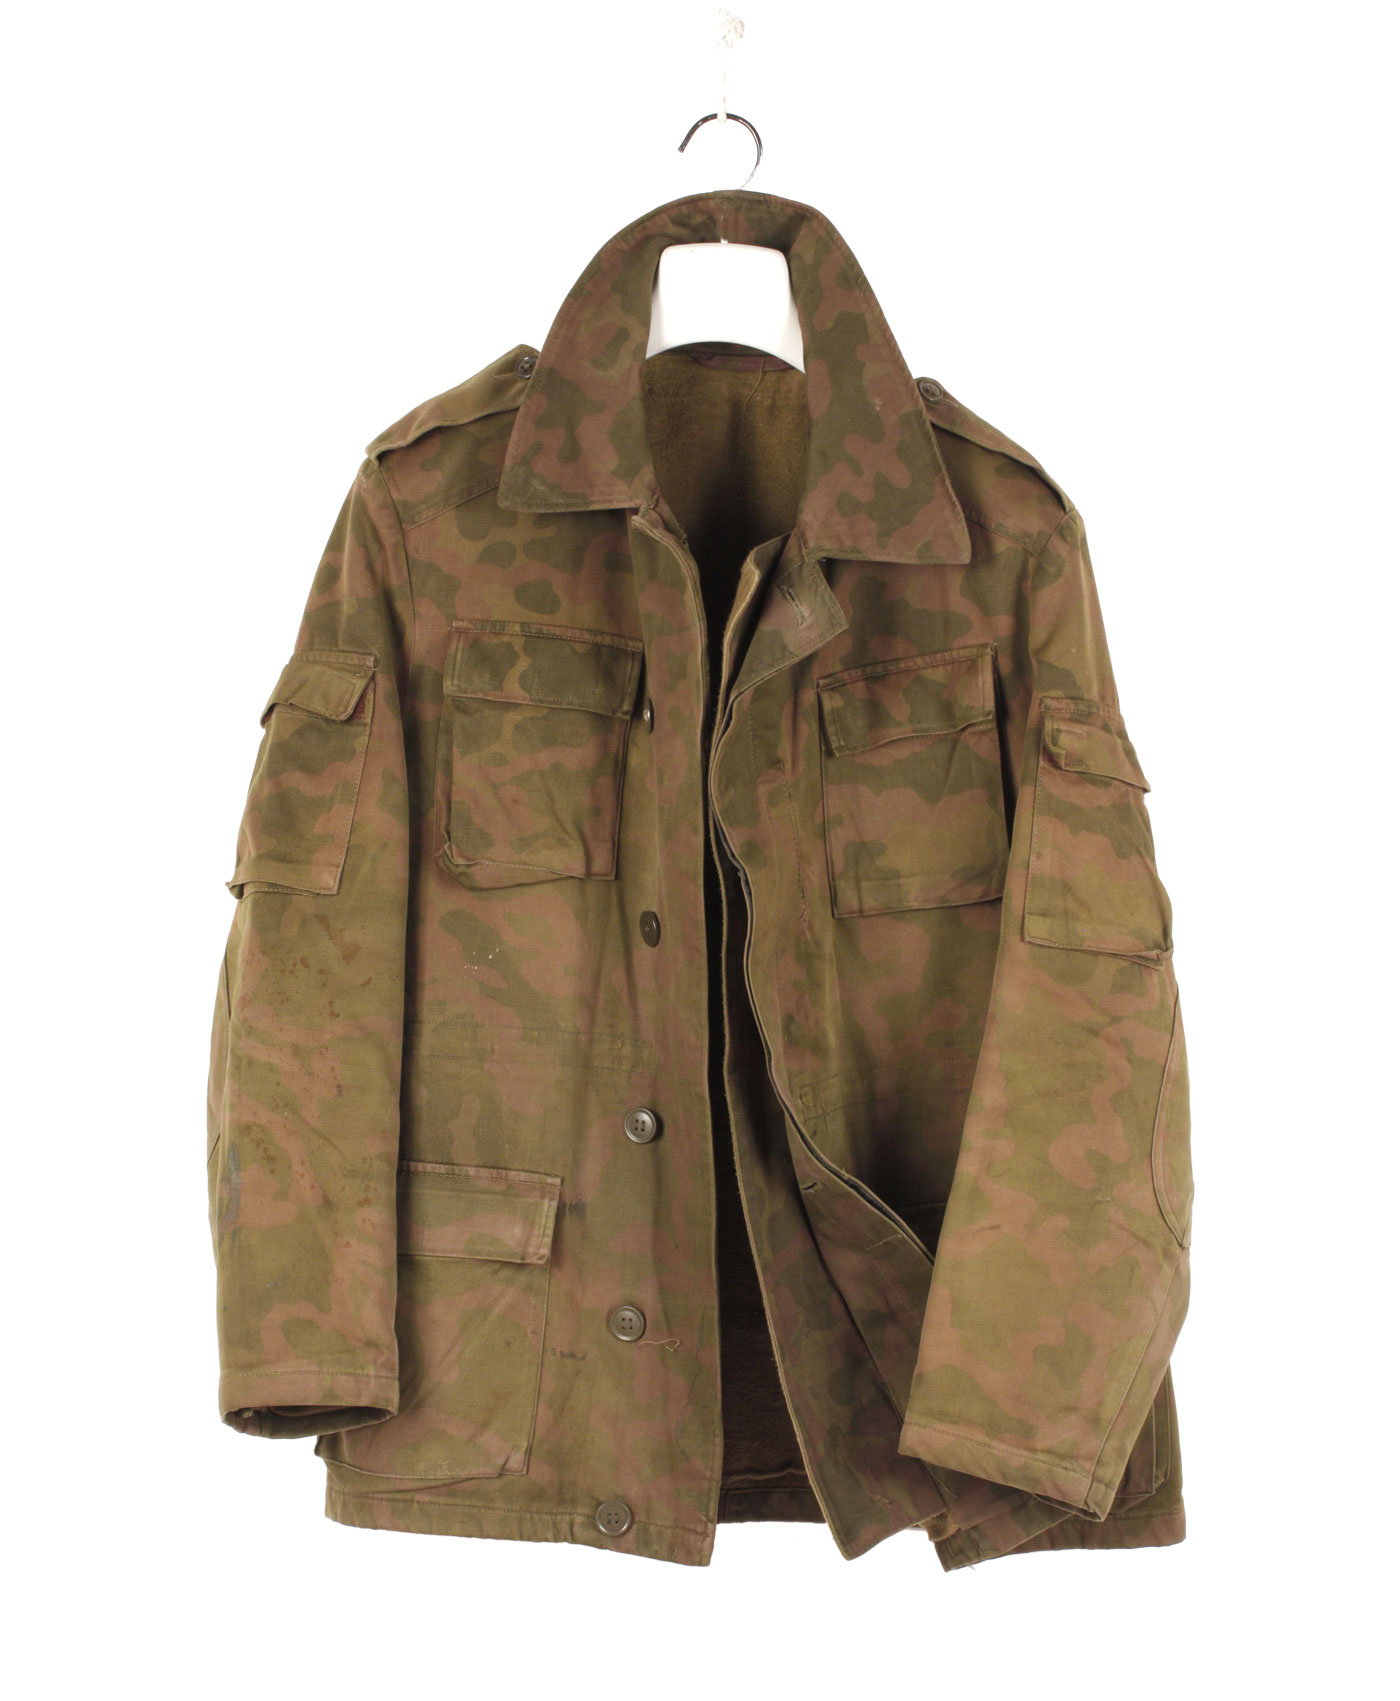 Military field jacket East Europe ’60/70s